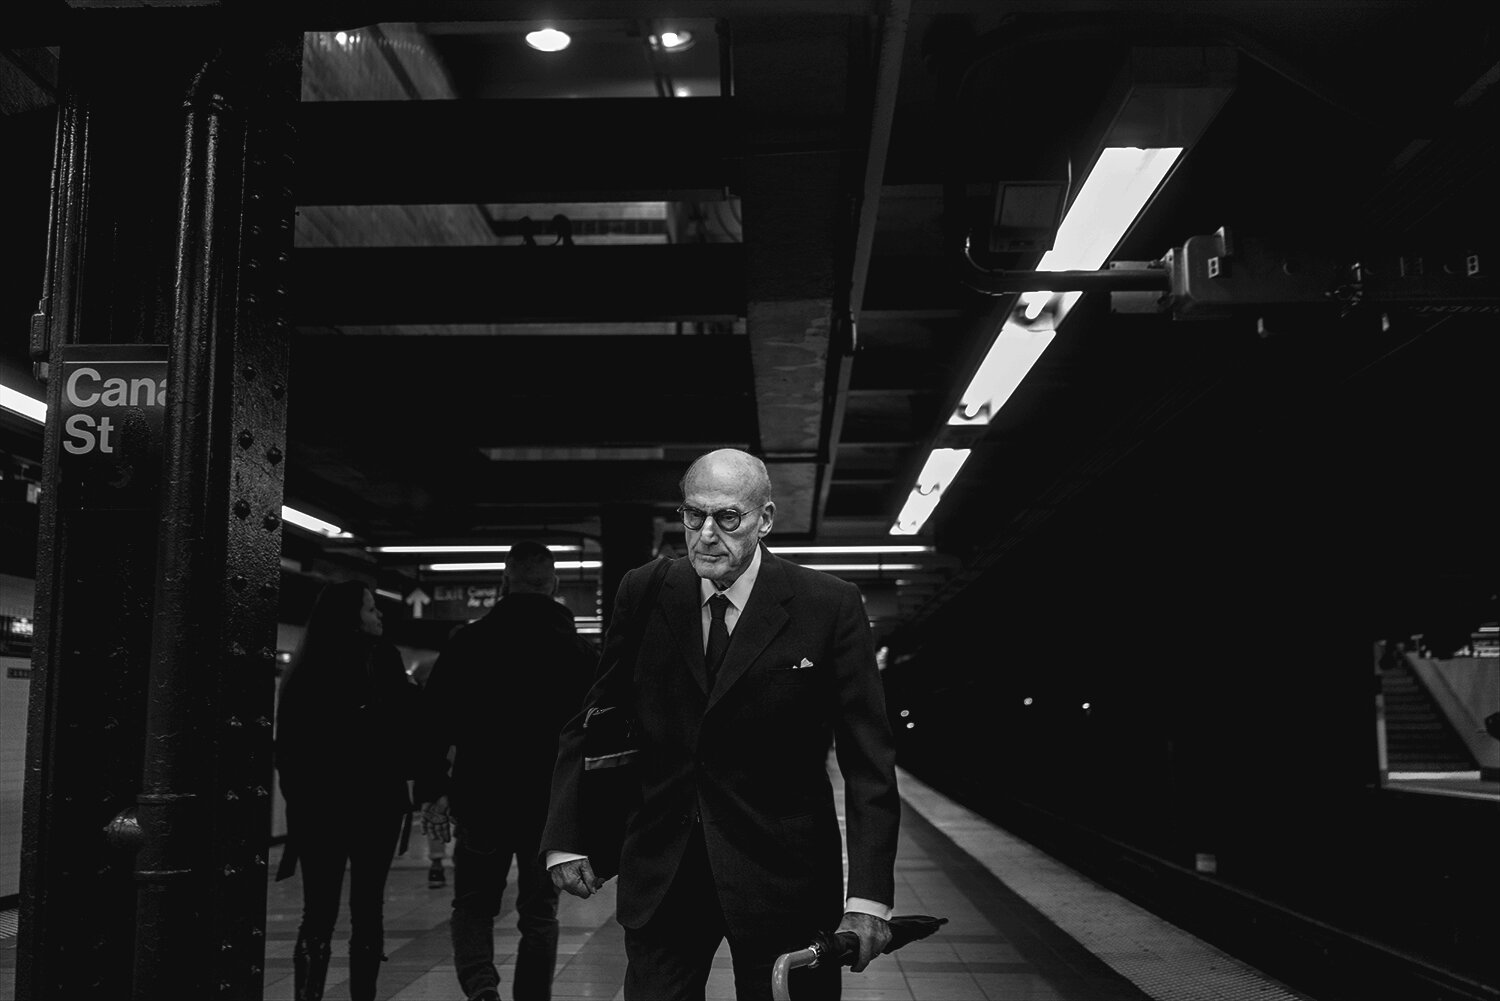 NYC_Subway_2018_Old_Umbrella_Man-001.jpg